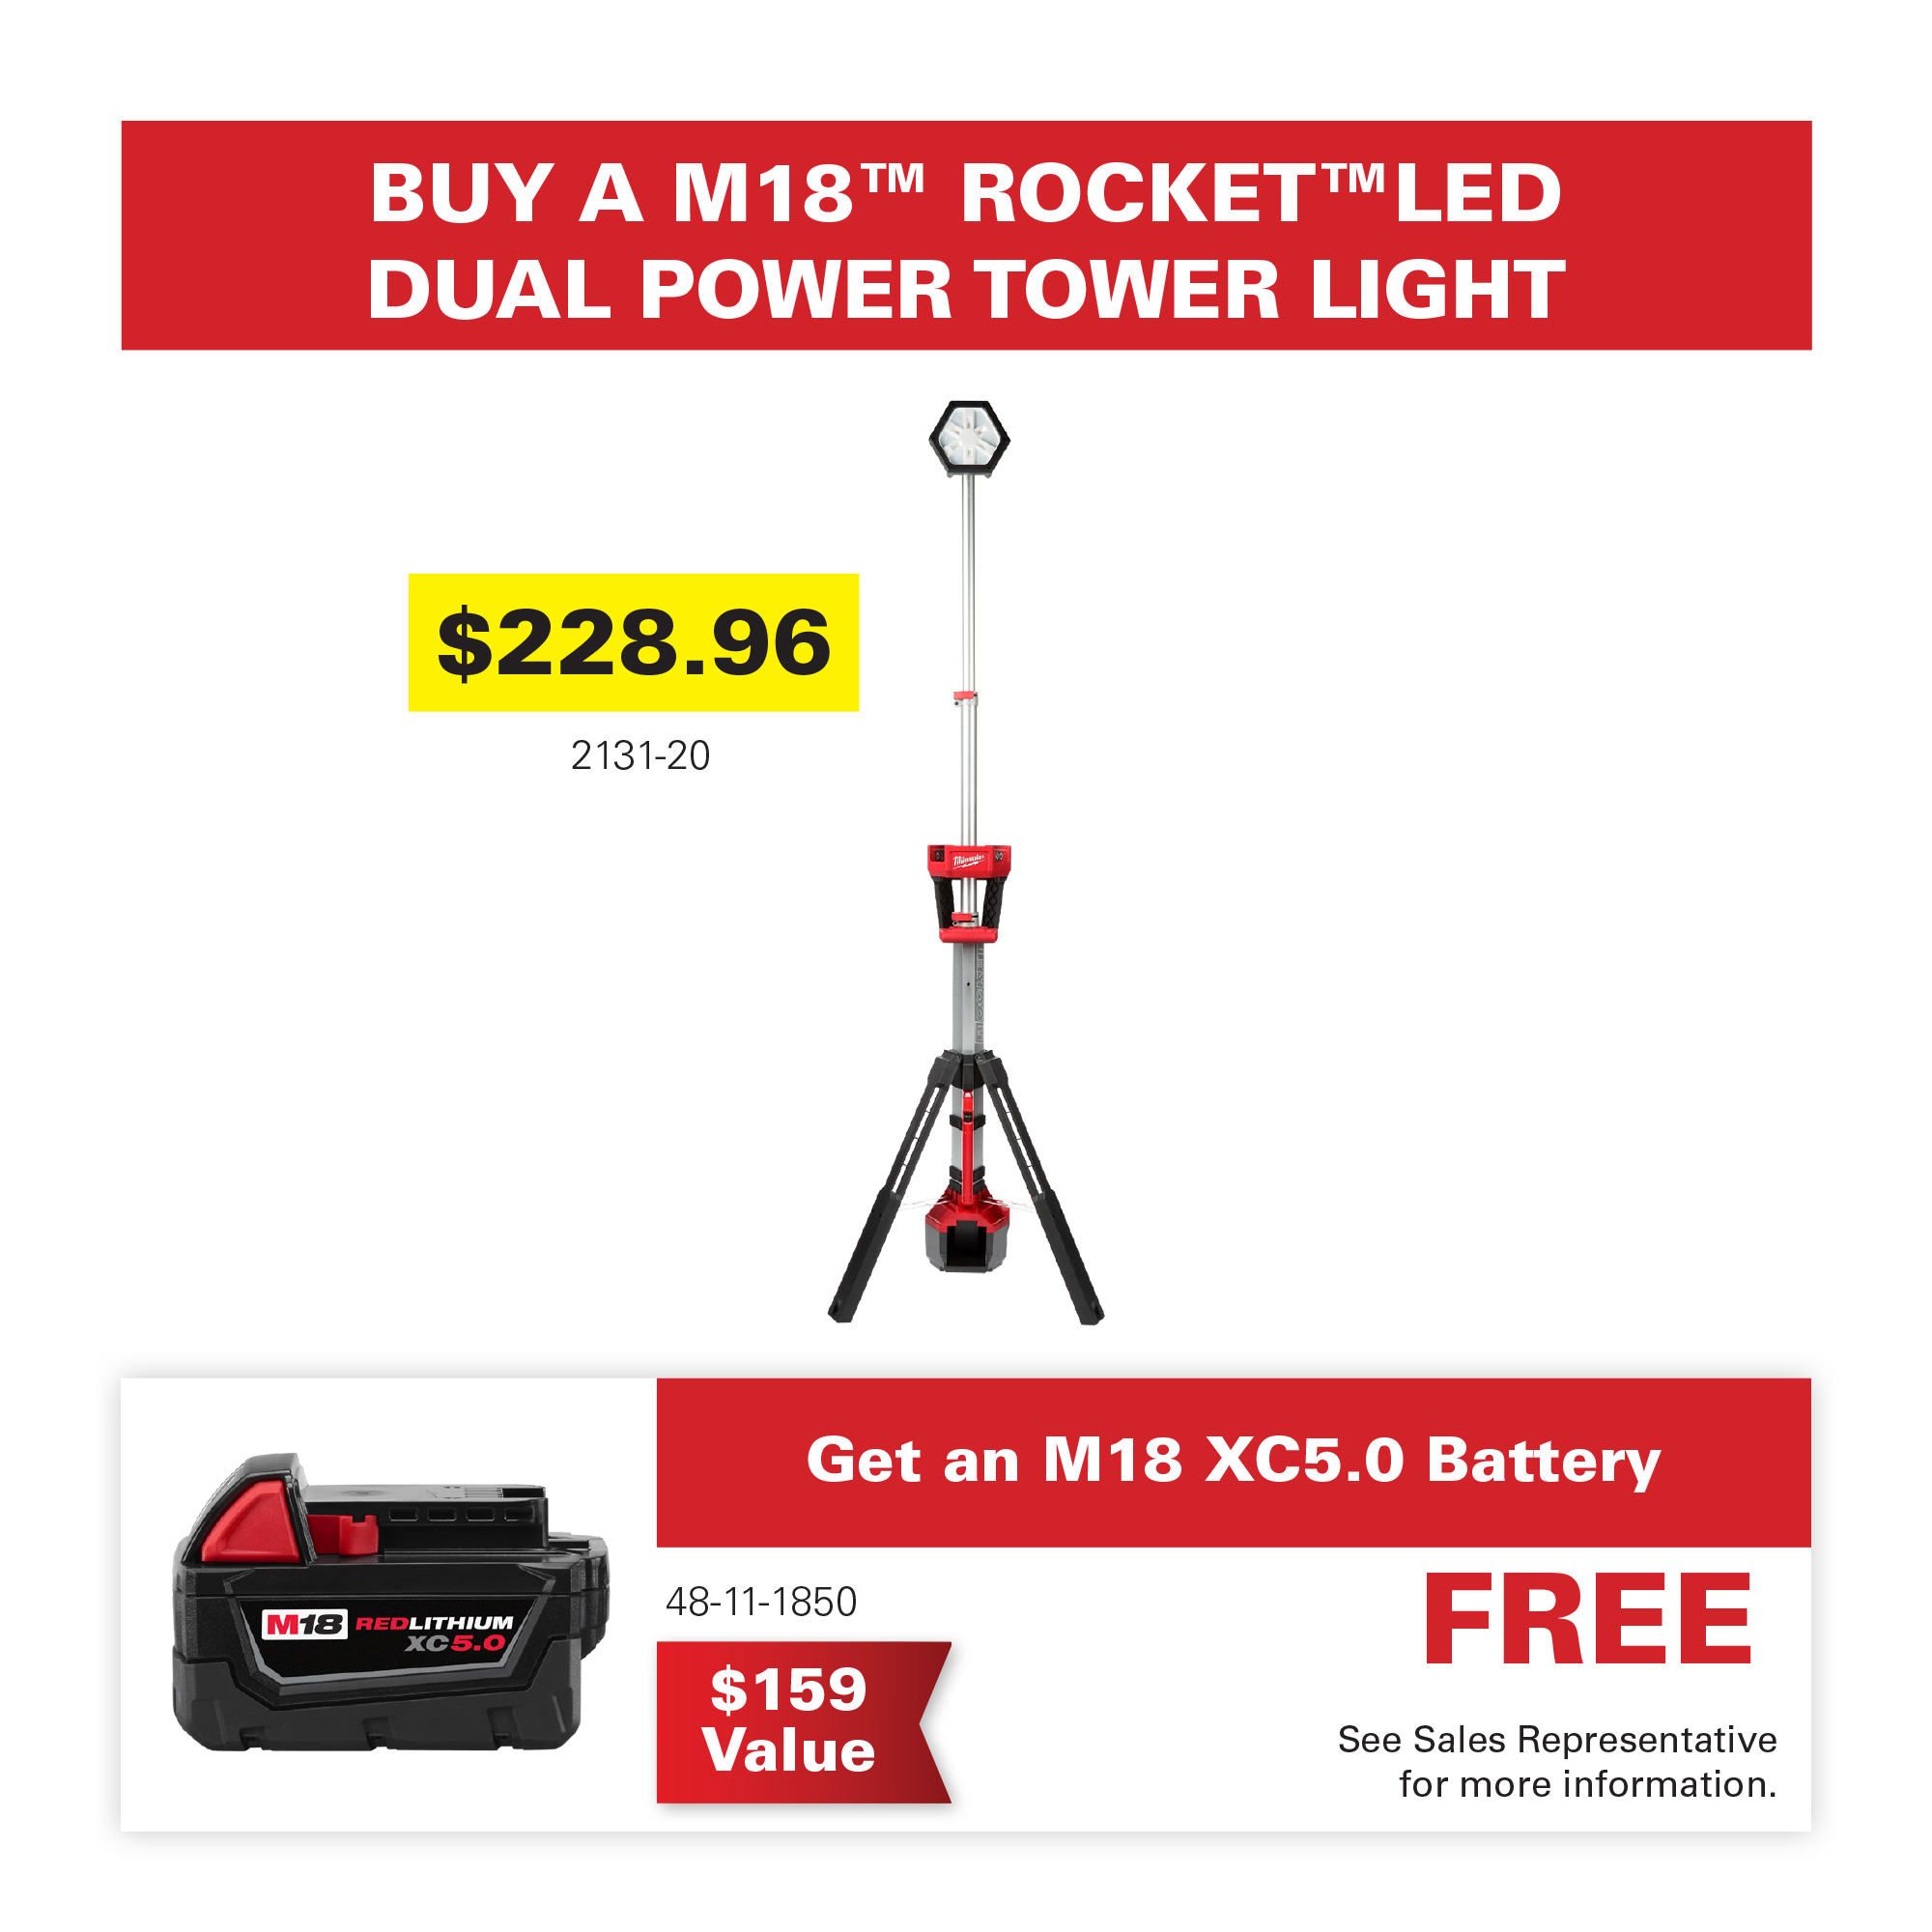 Milwaukee M18 Rocket LED Dual Power Tower Light Promo